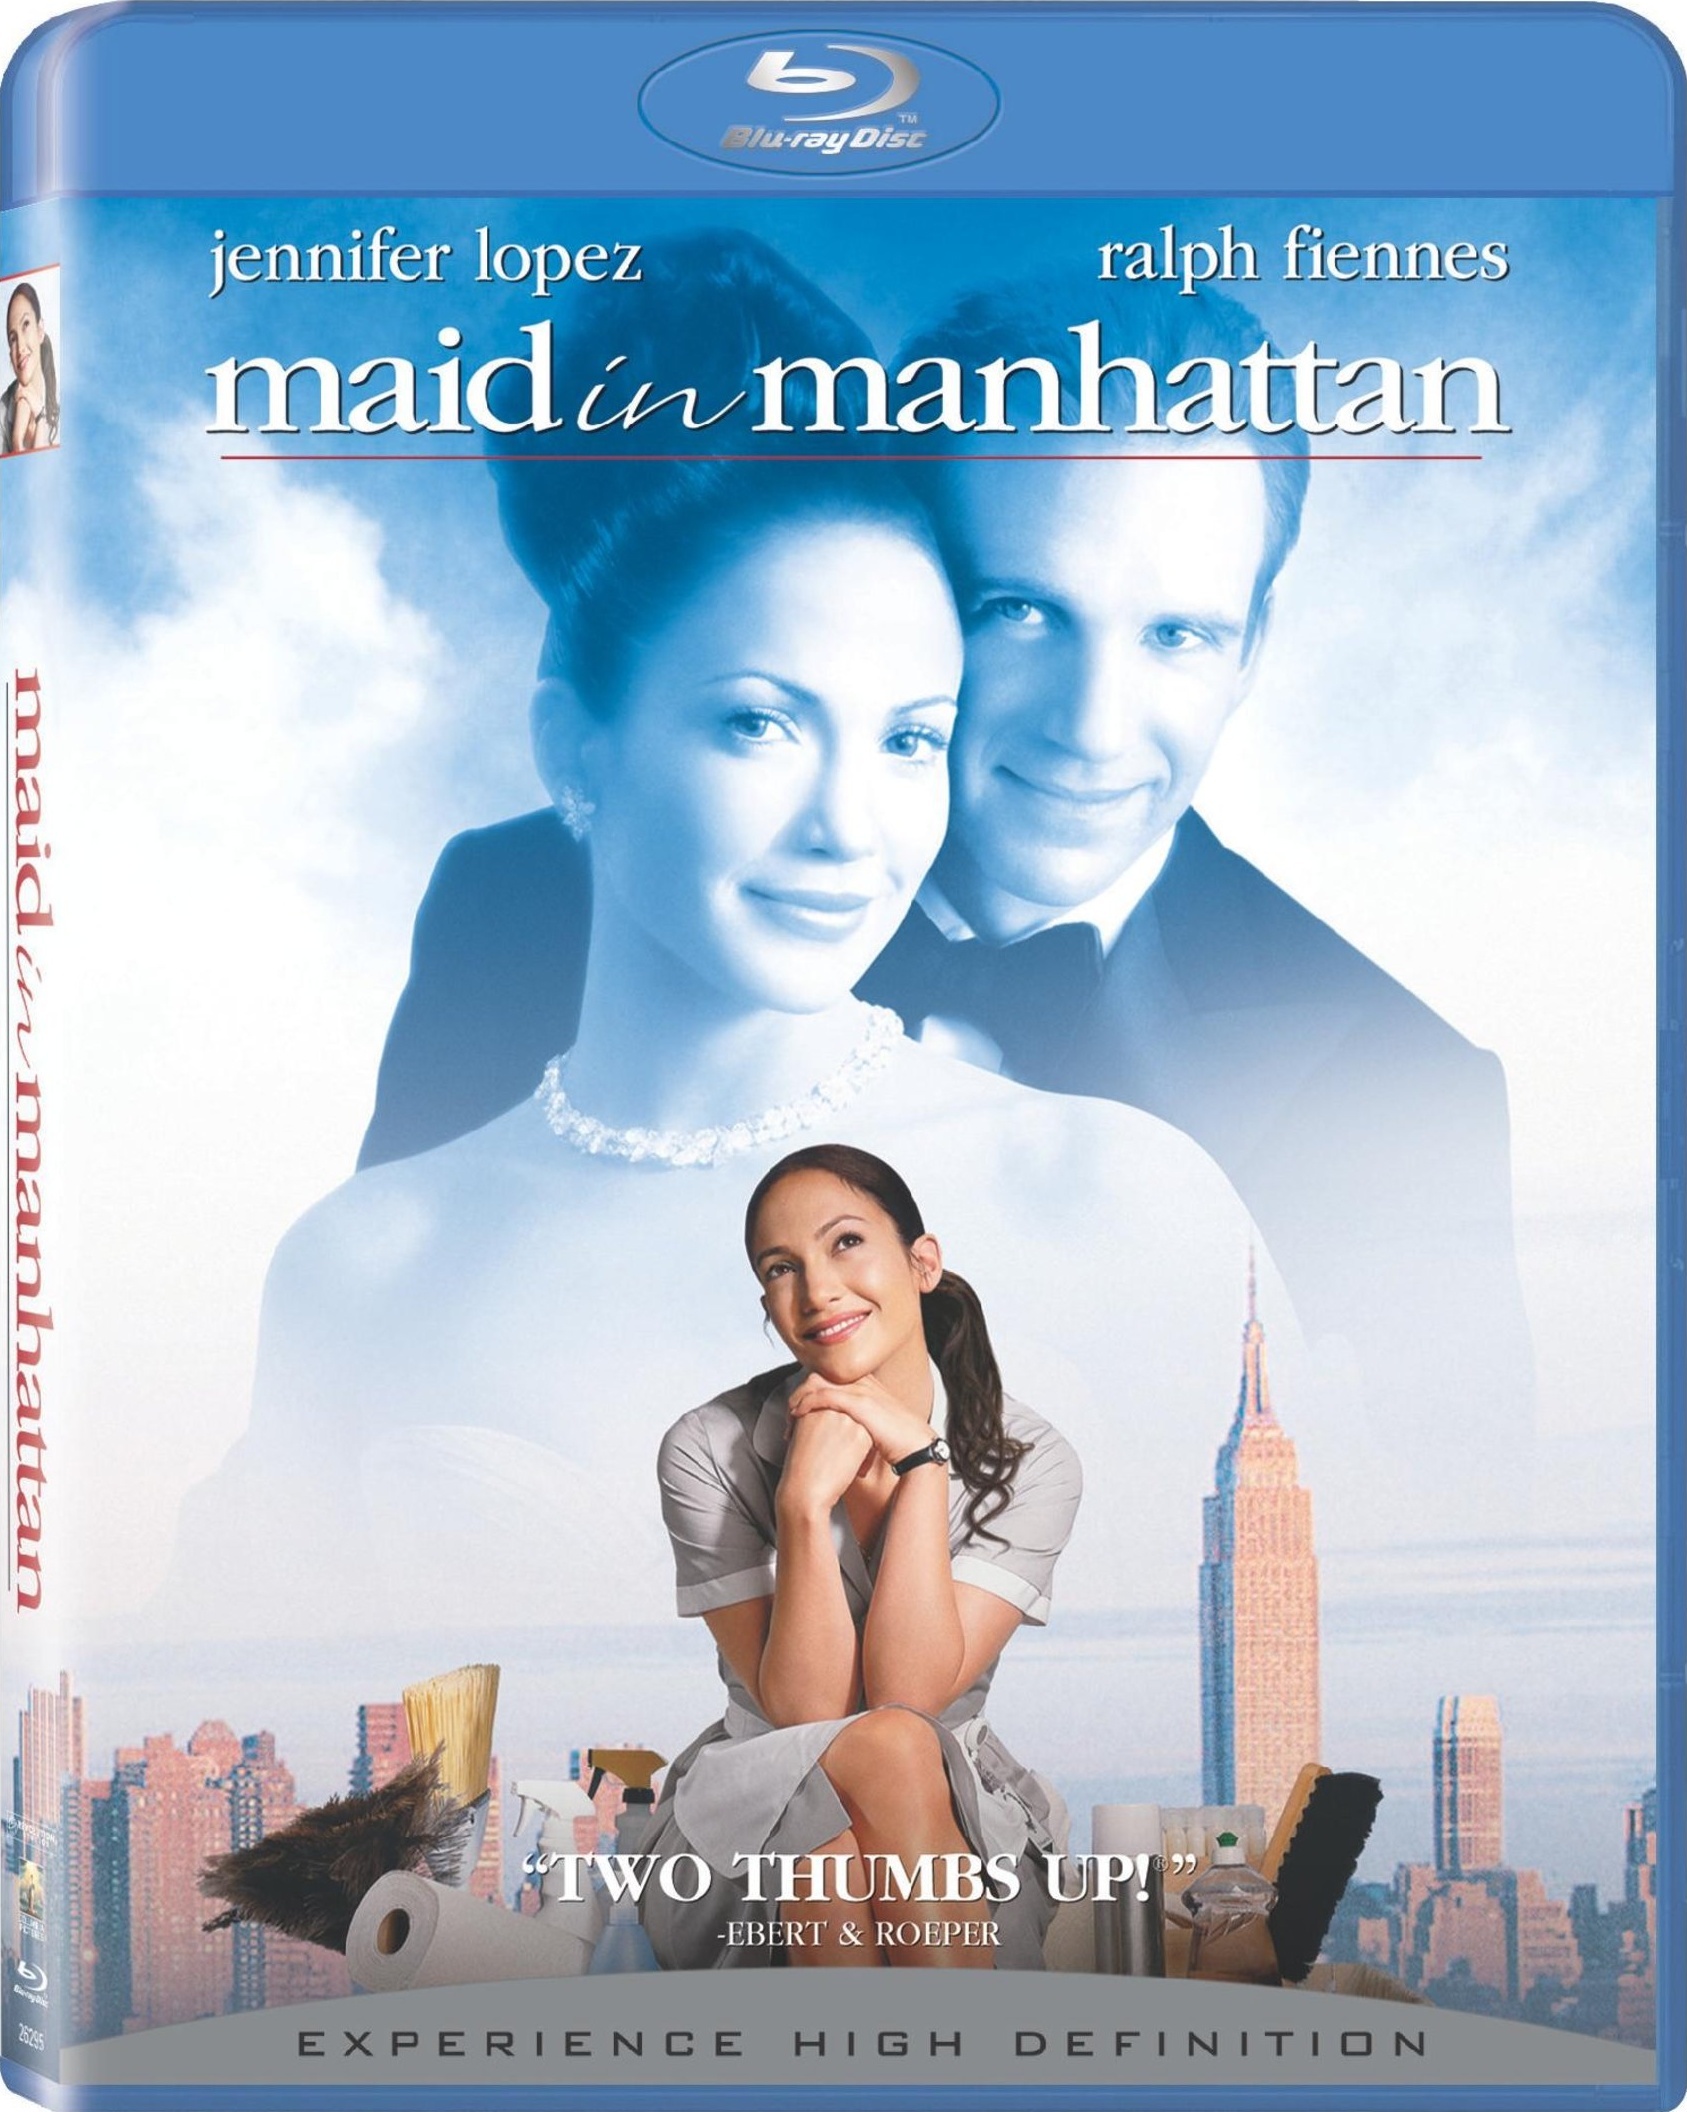 [曼哈顿女佣].Maid.In.Manhattan.2002.BluRay.1080p.AVC.TrueHD.5.1-HDHome     26.39G-1.jpg